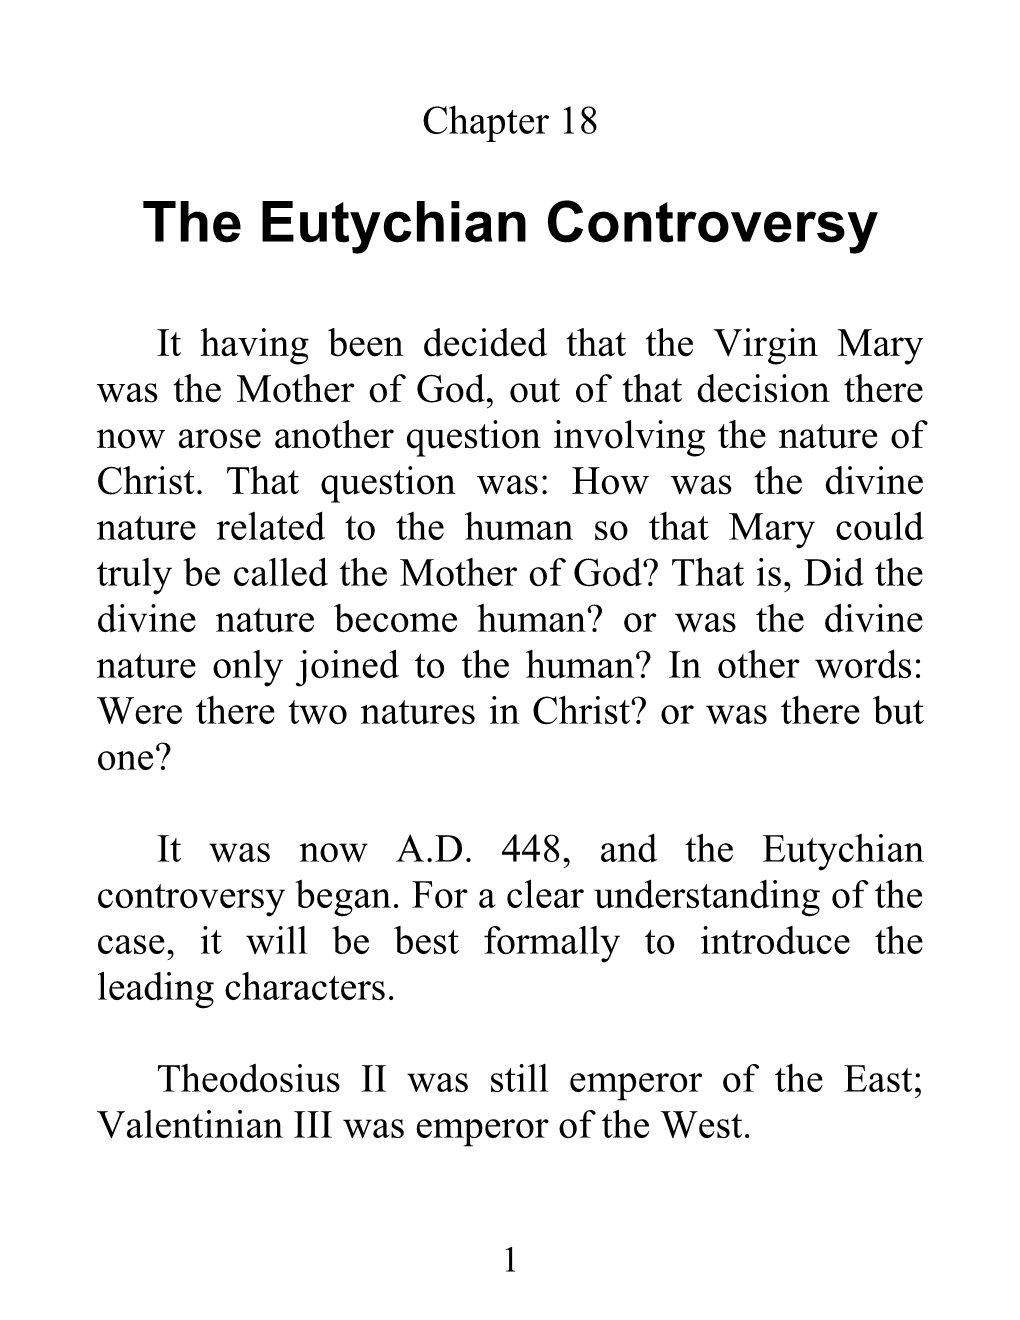 The Eutychian Controversy